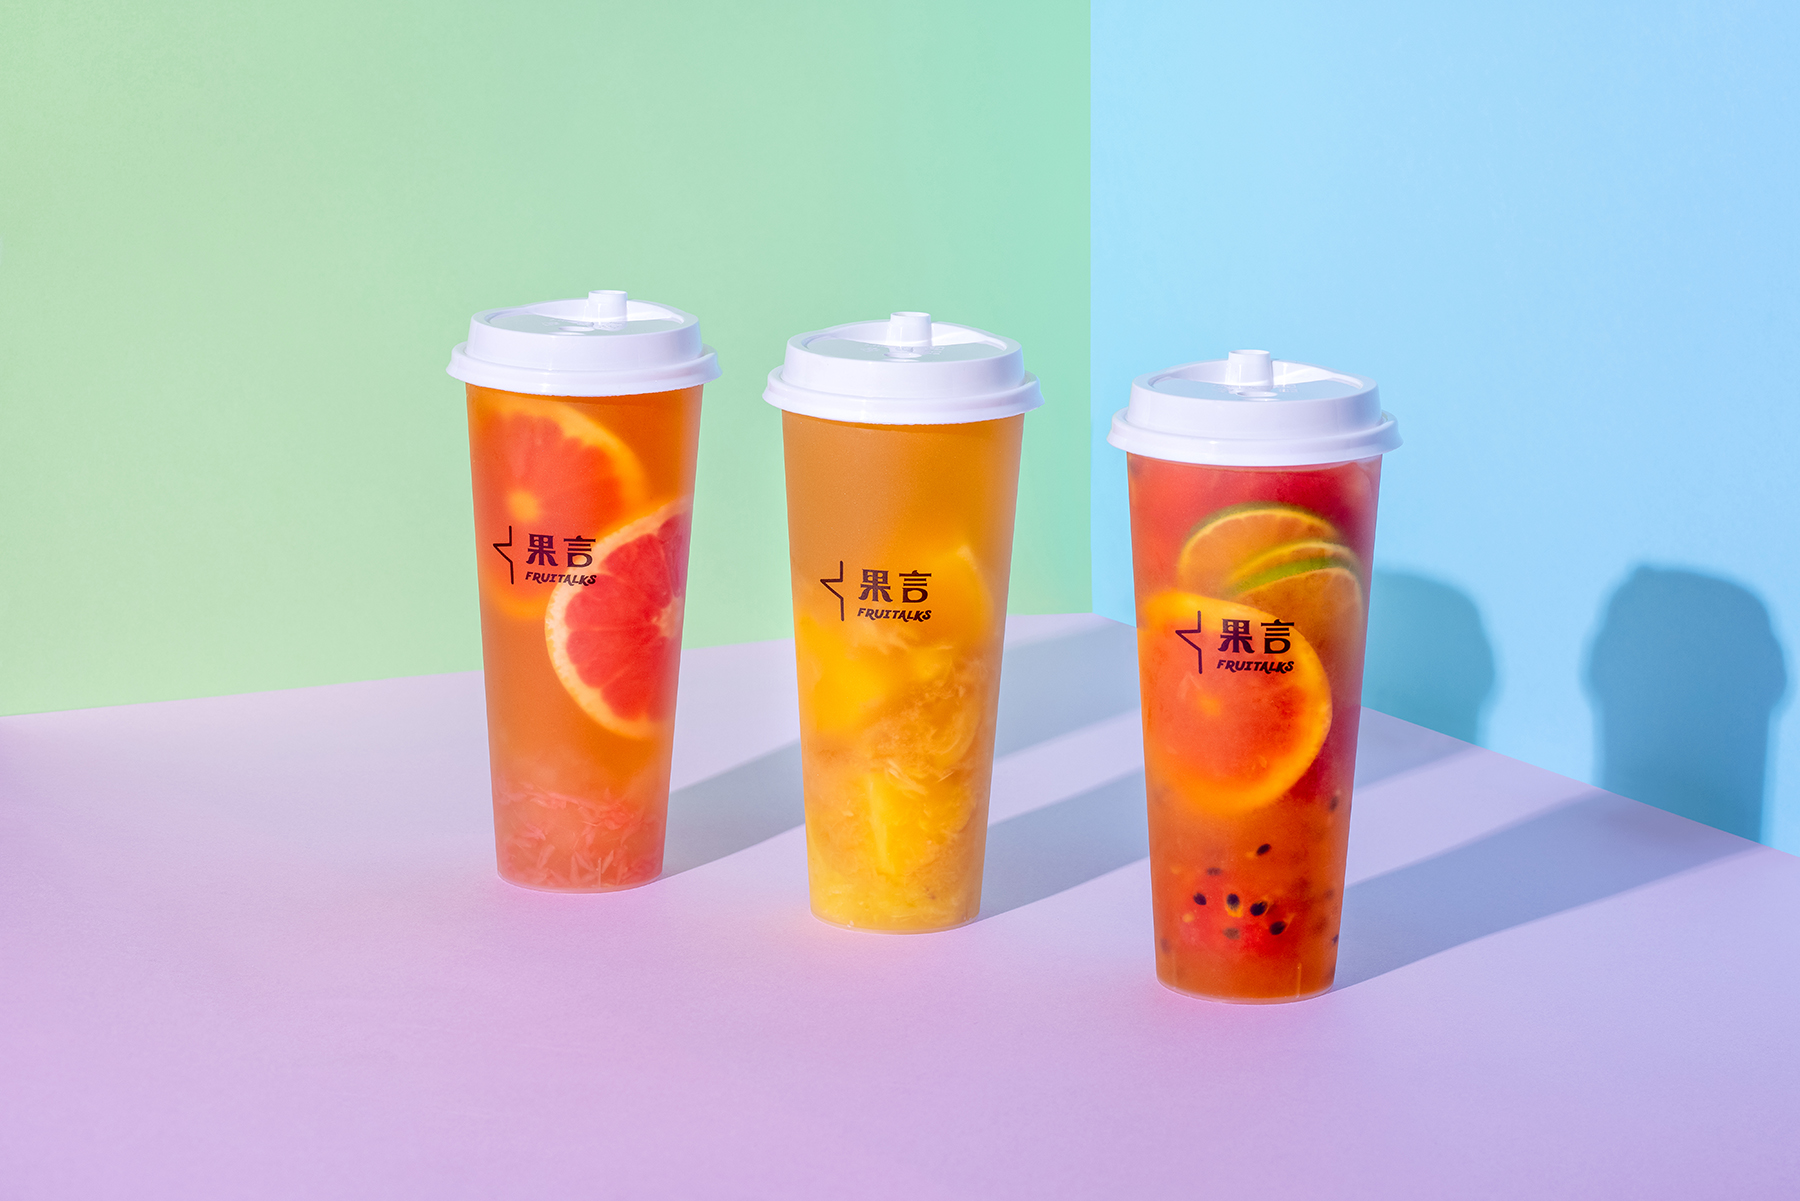 HK Central Best Bubble Fruit Tea Shop - Nina Hospitality Central Market Dining Fruitalks signature drinks